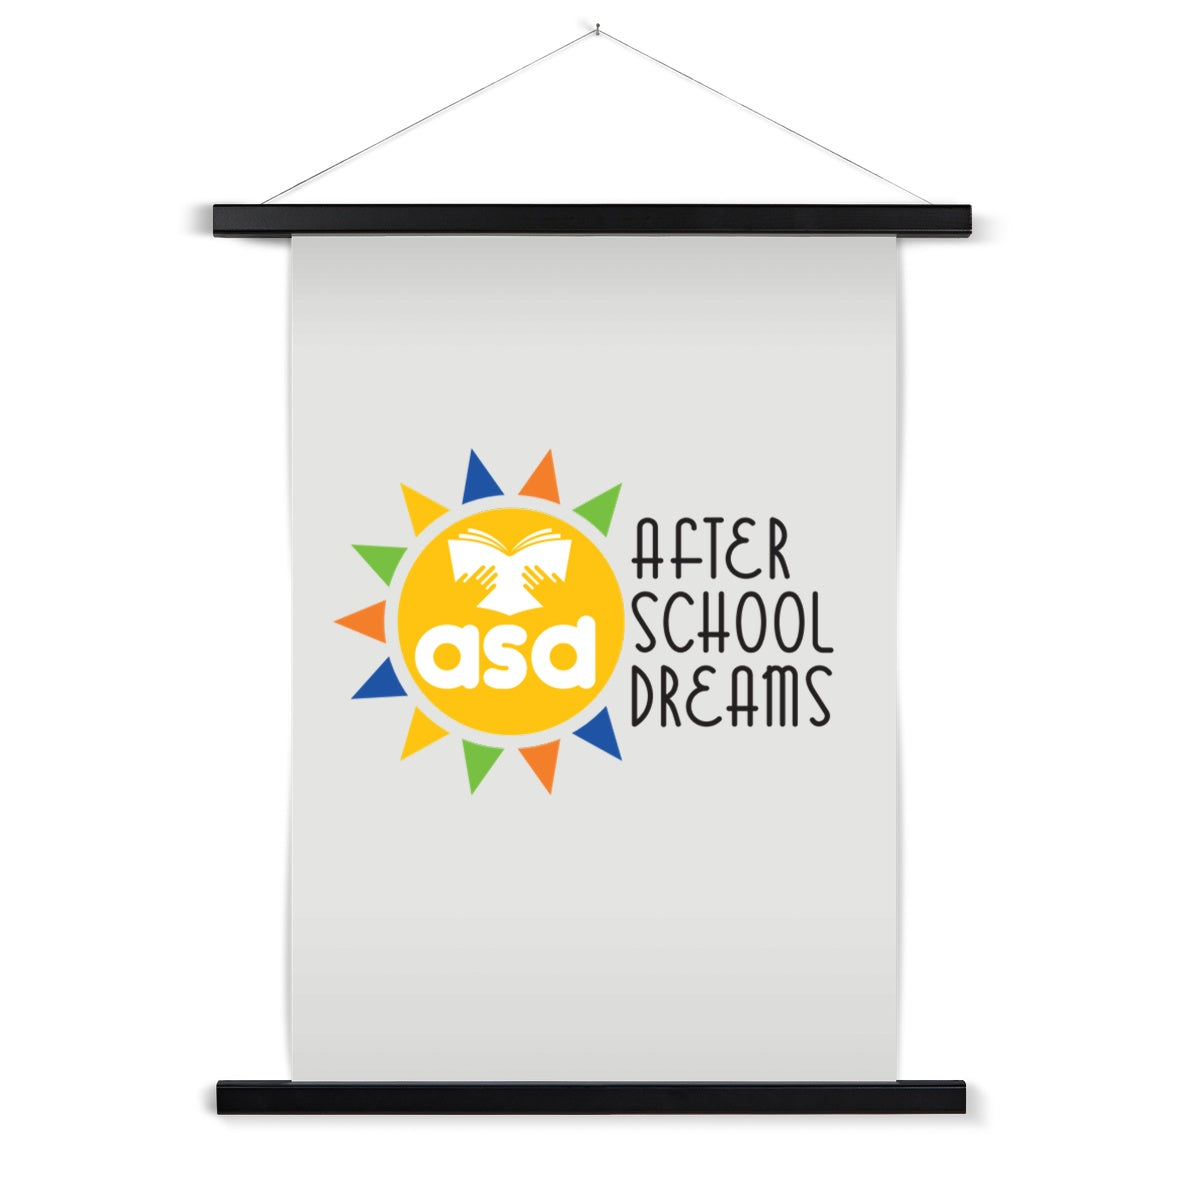 After School Dreams Logo Art Print with Hanger